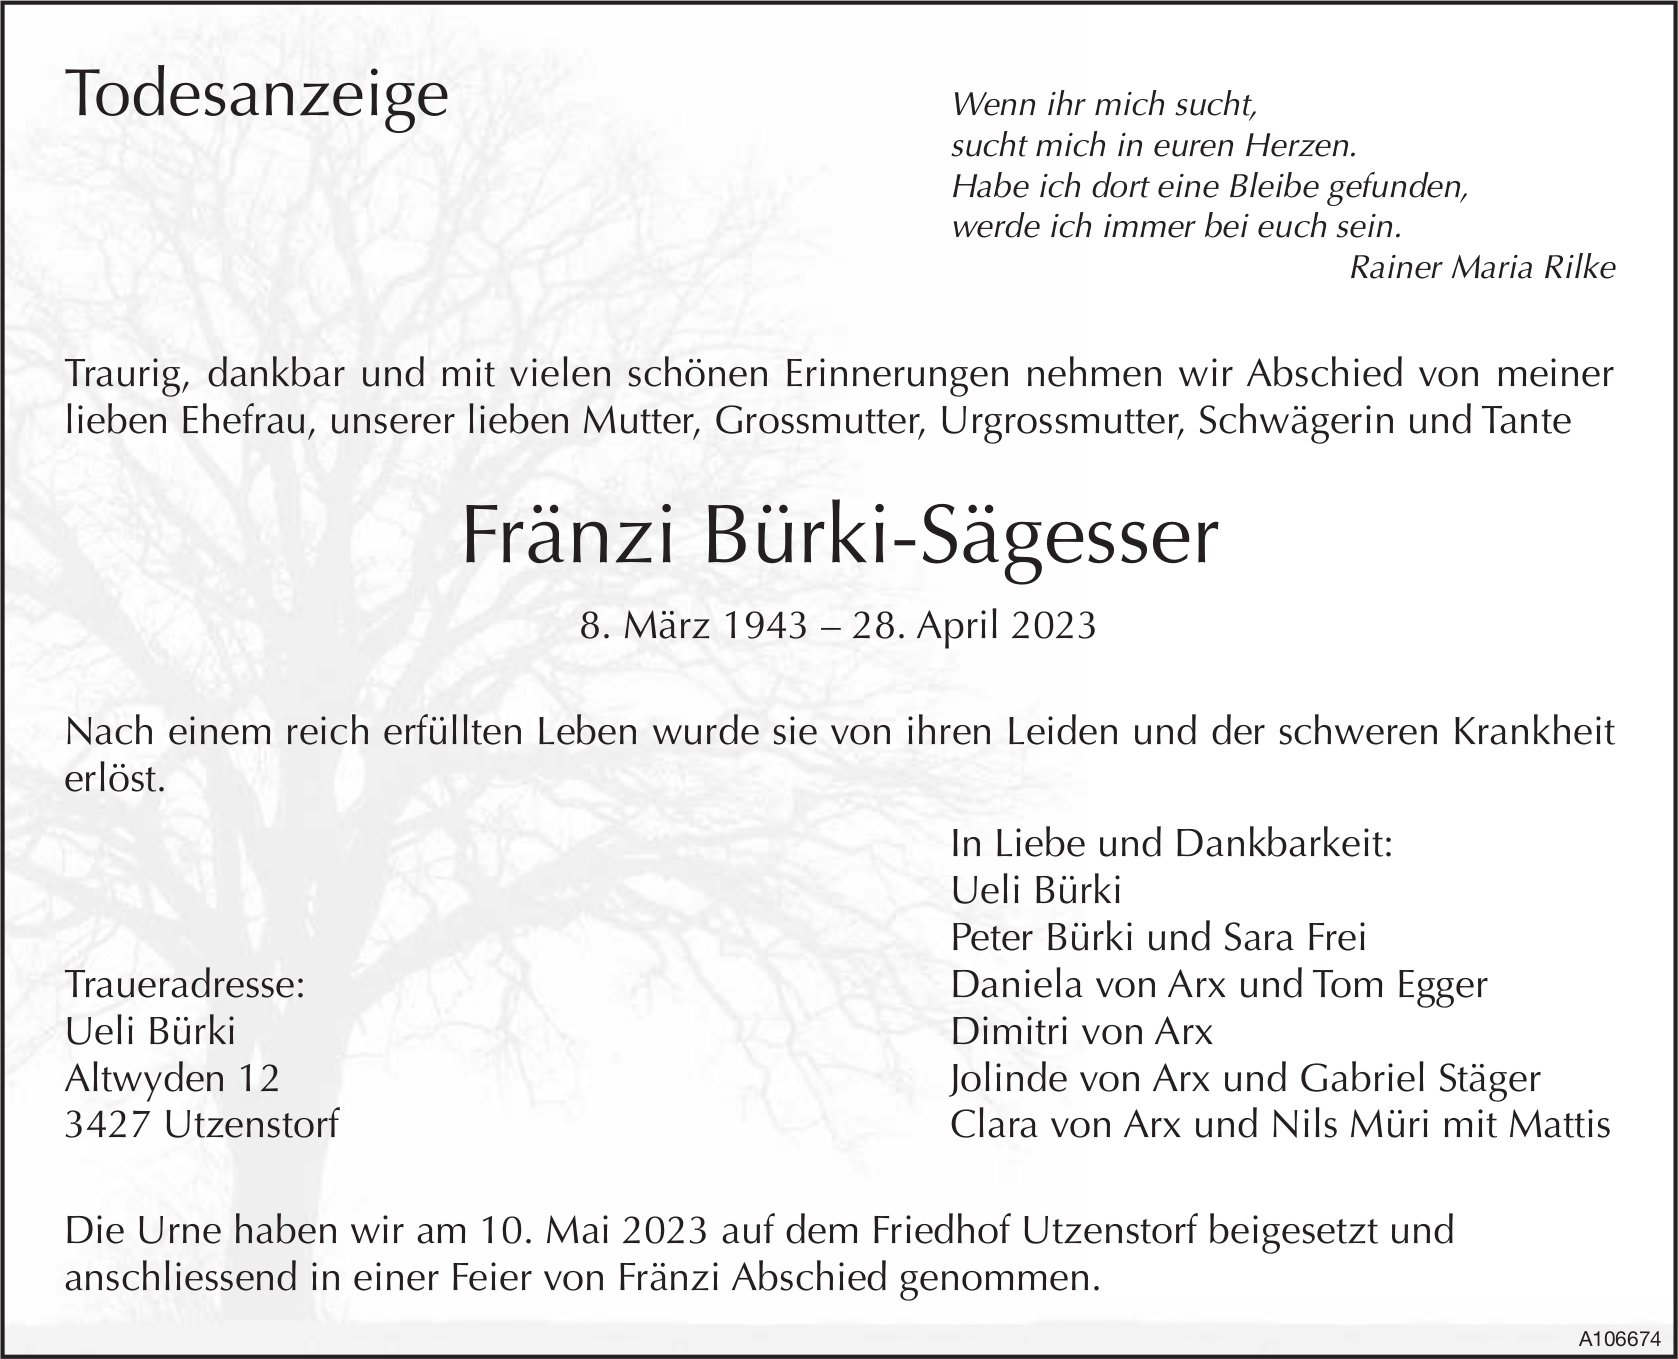 Fränzi Bürki-Sägesser, April 2023 / TA